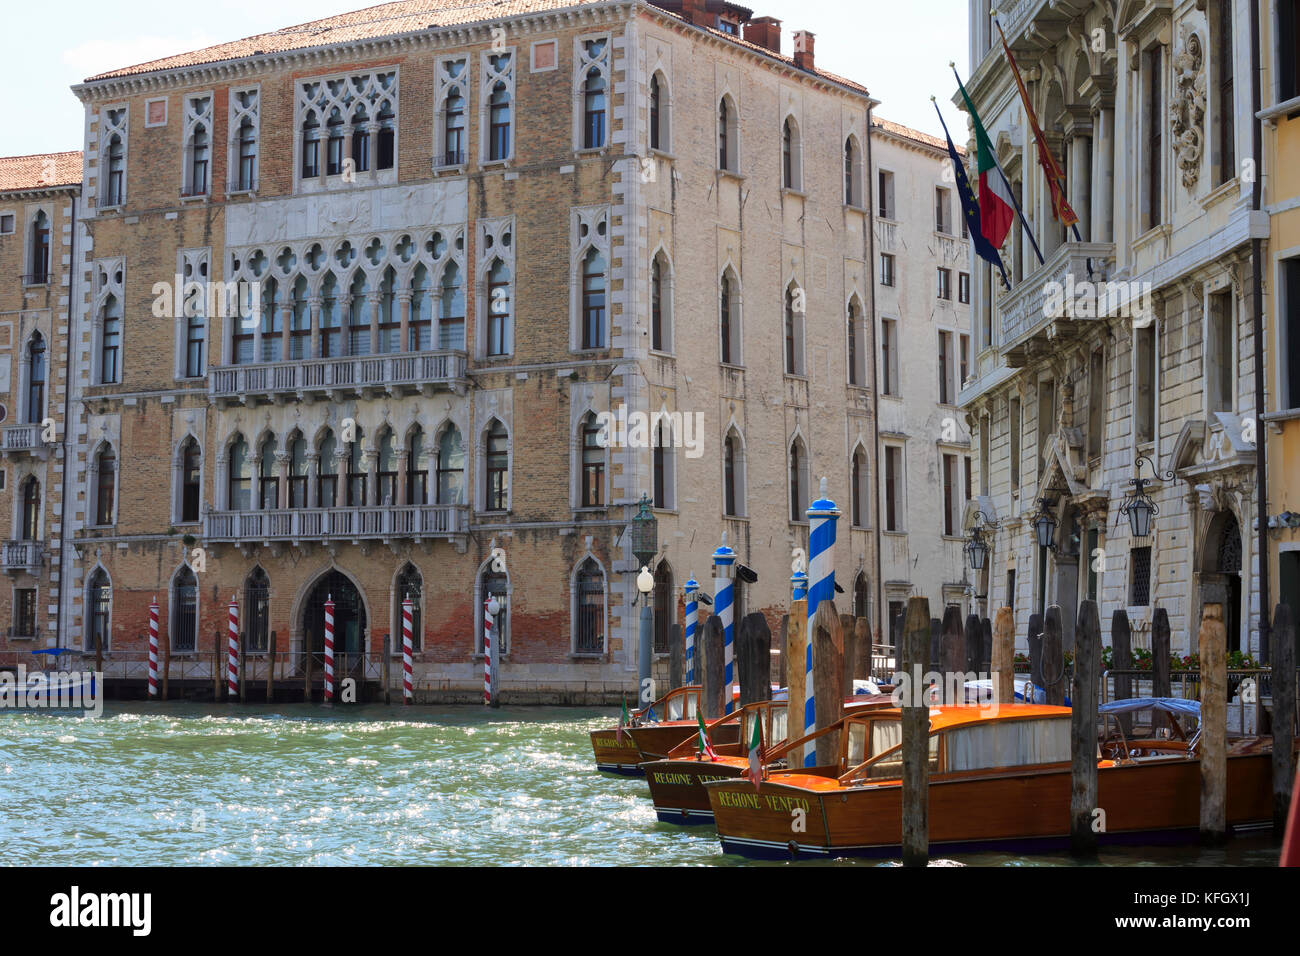 Ca' d'Oro, Grand Canal, Venice, Italy Stock Photo - Alamy